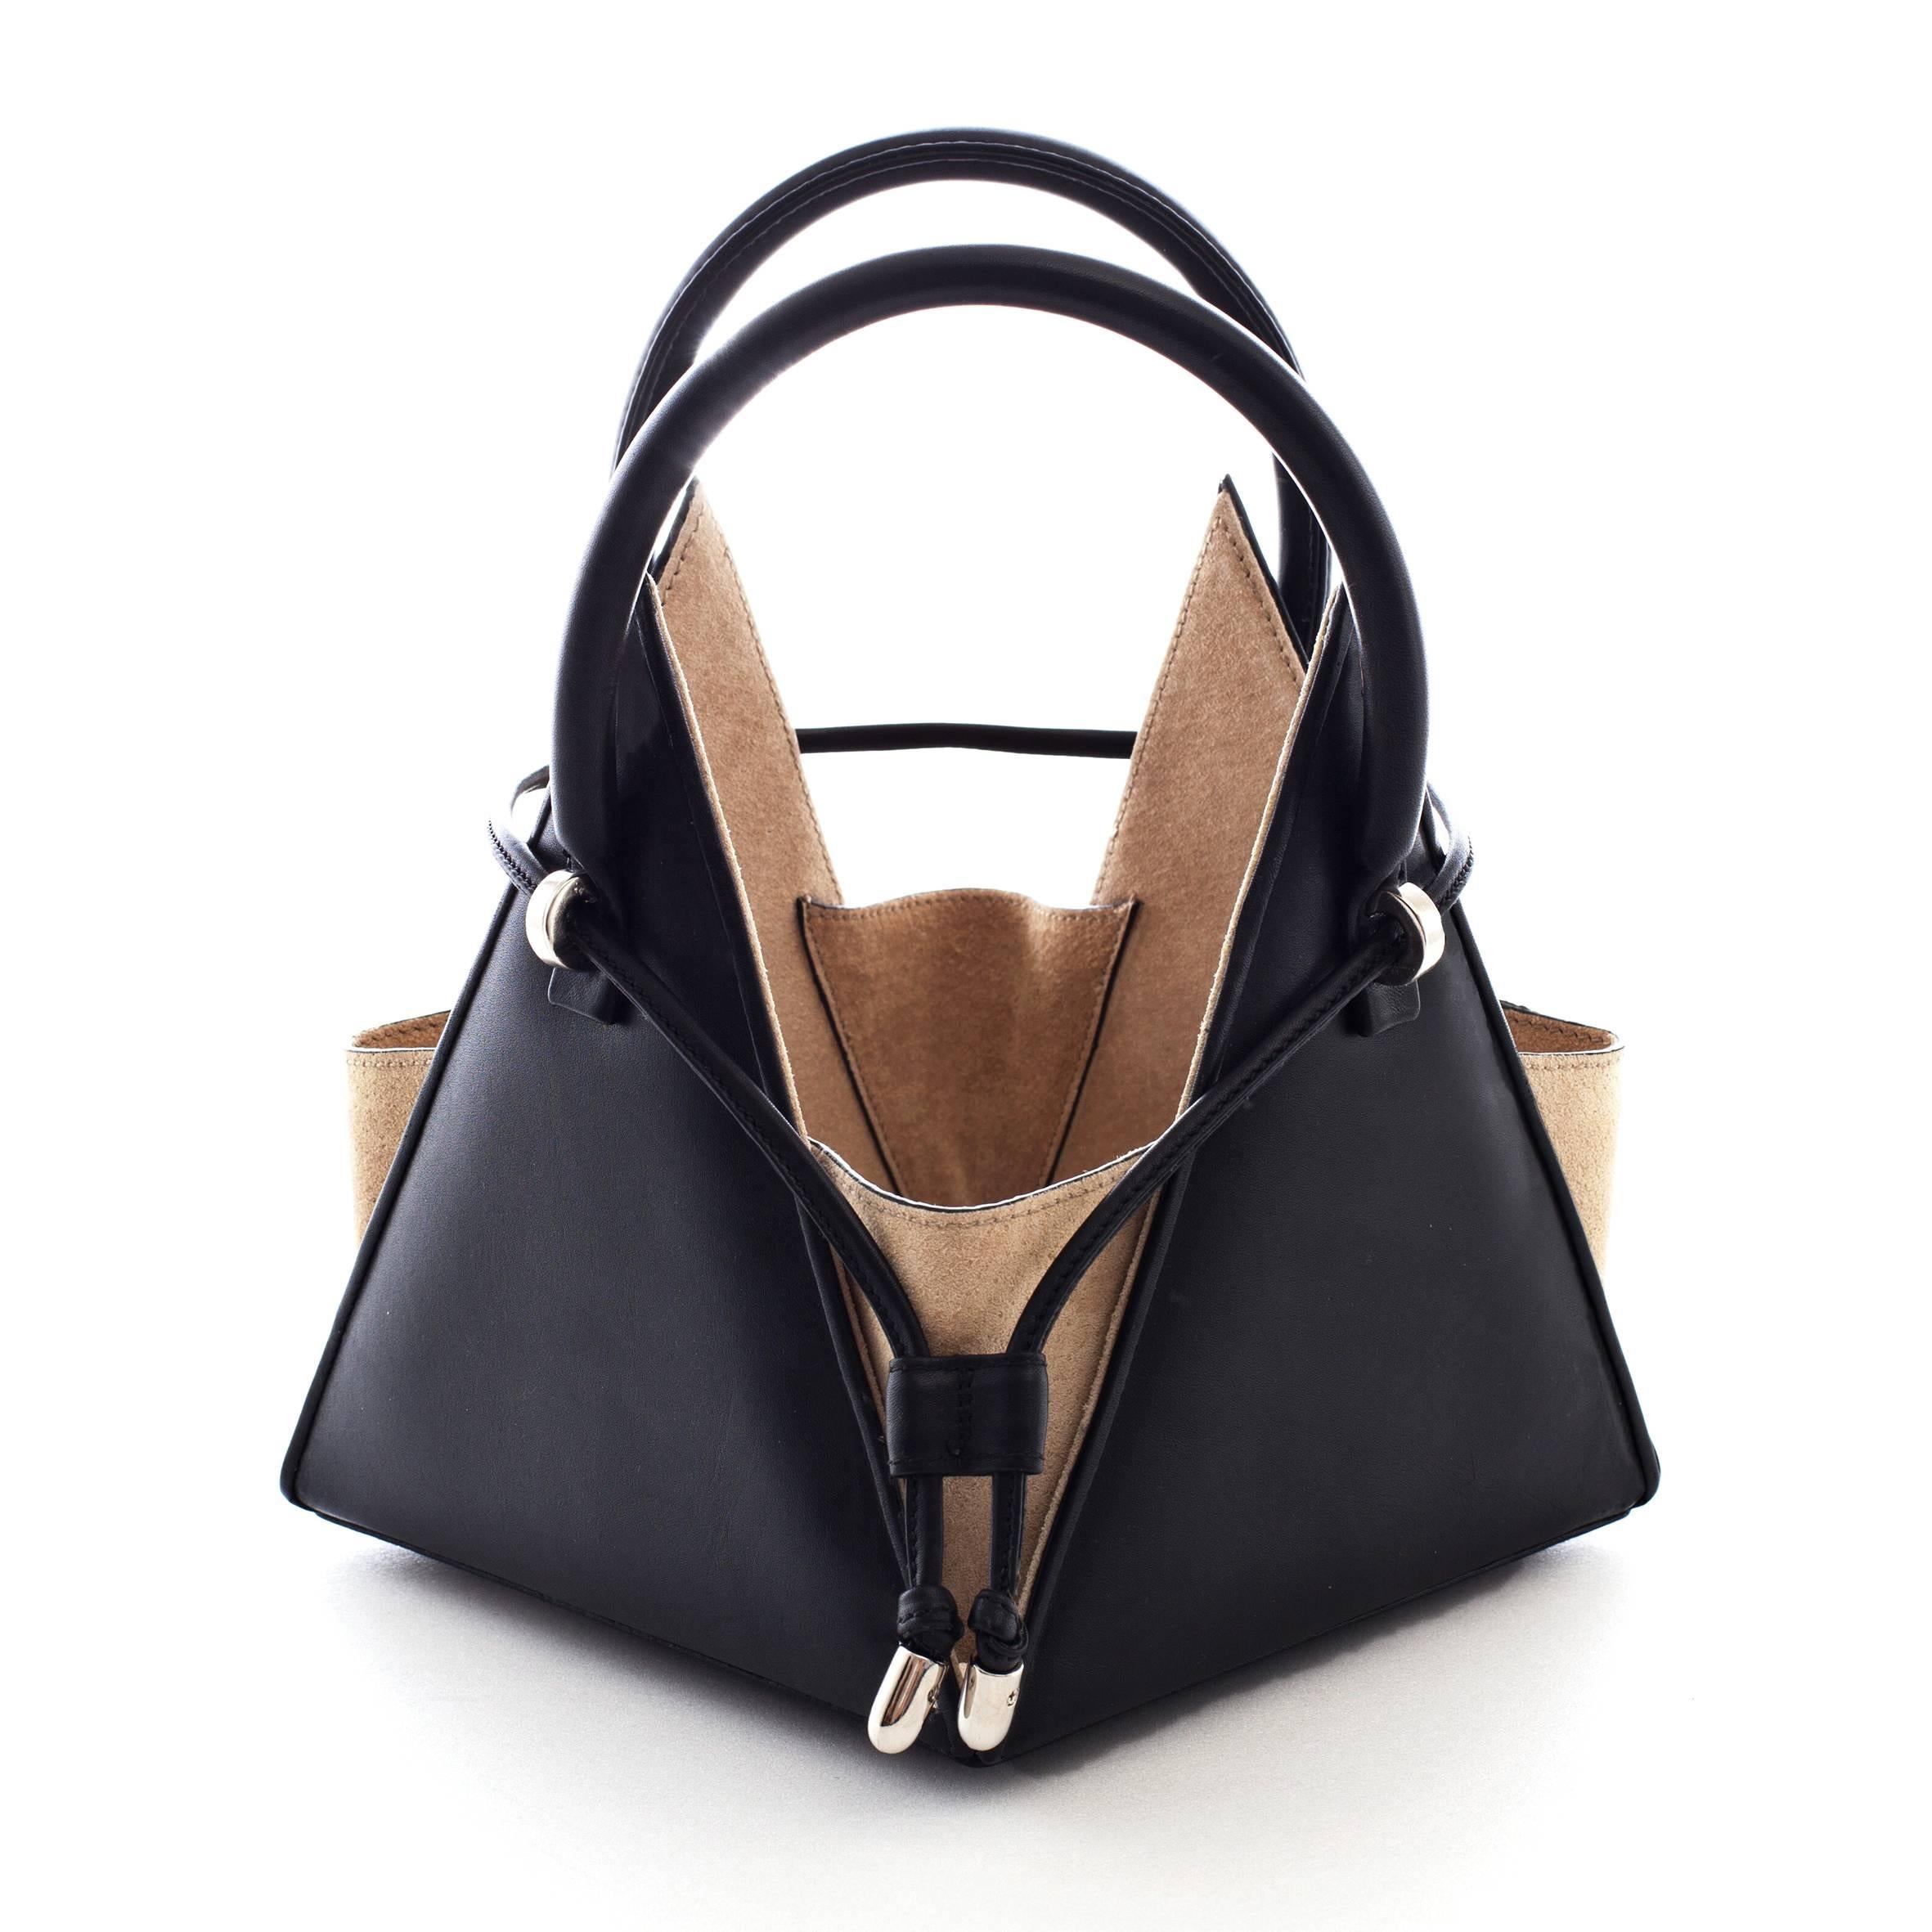 NitaSuri Lia Black Leather Pyramid Handbag In New Condition For Sale In Madrid, ES